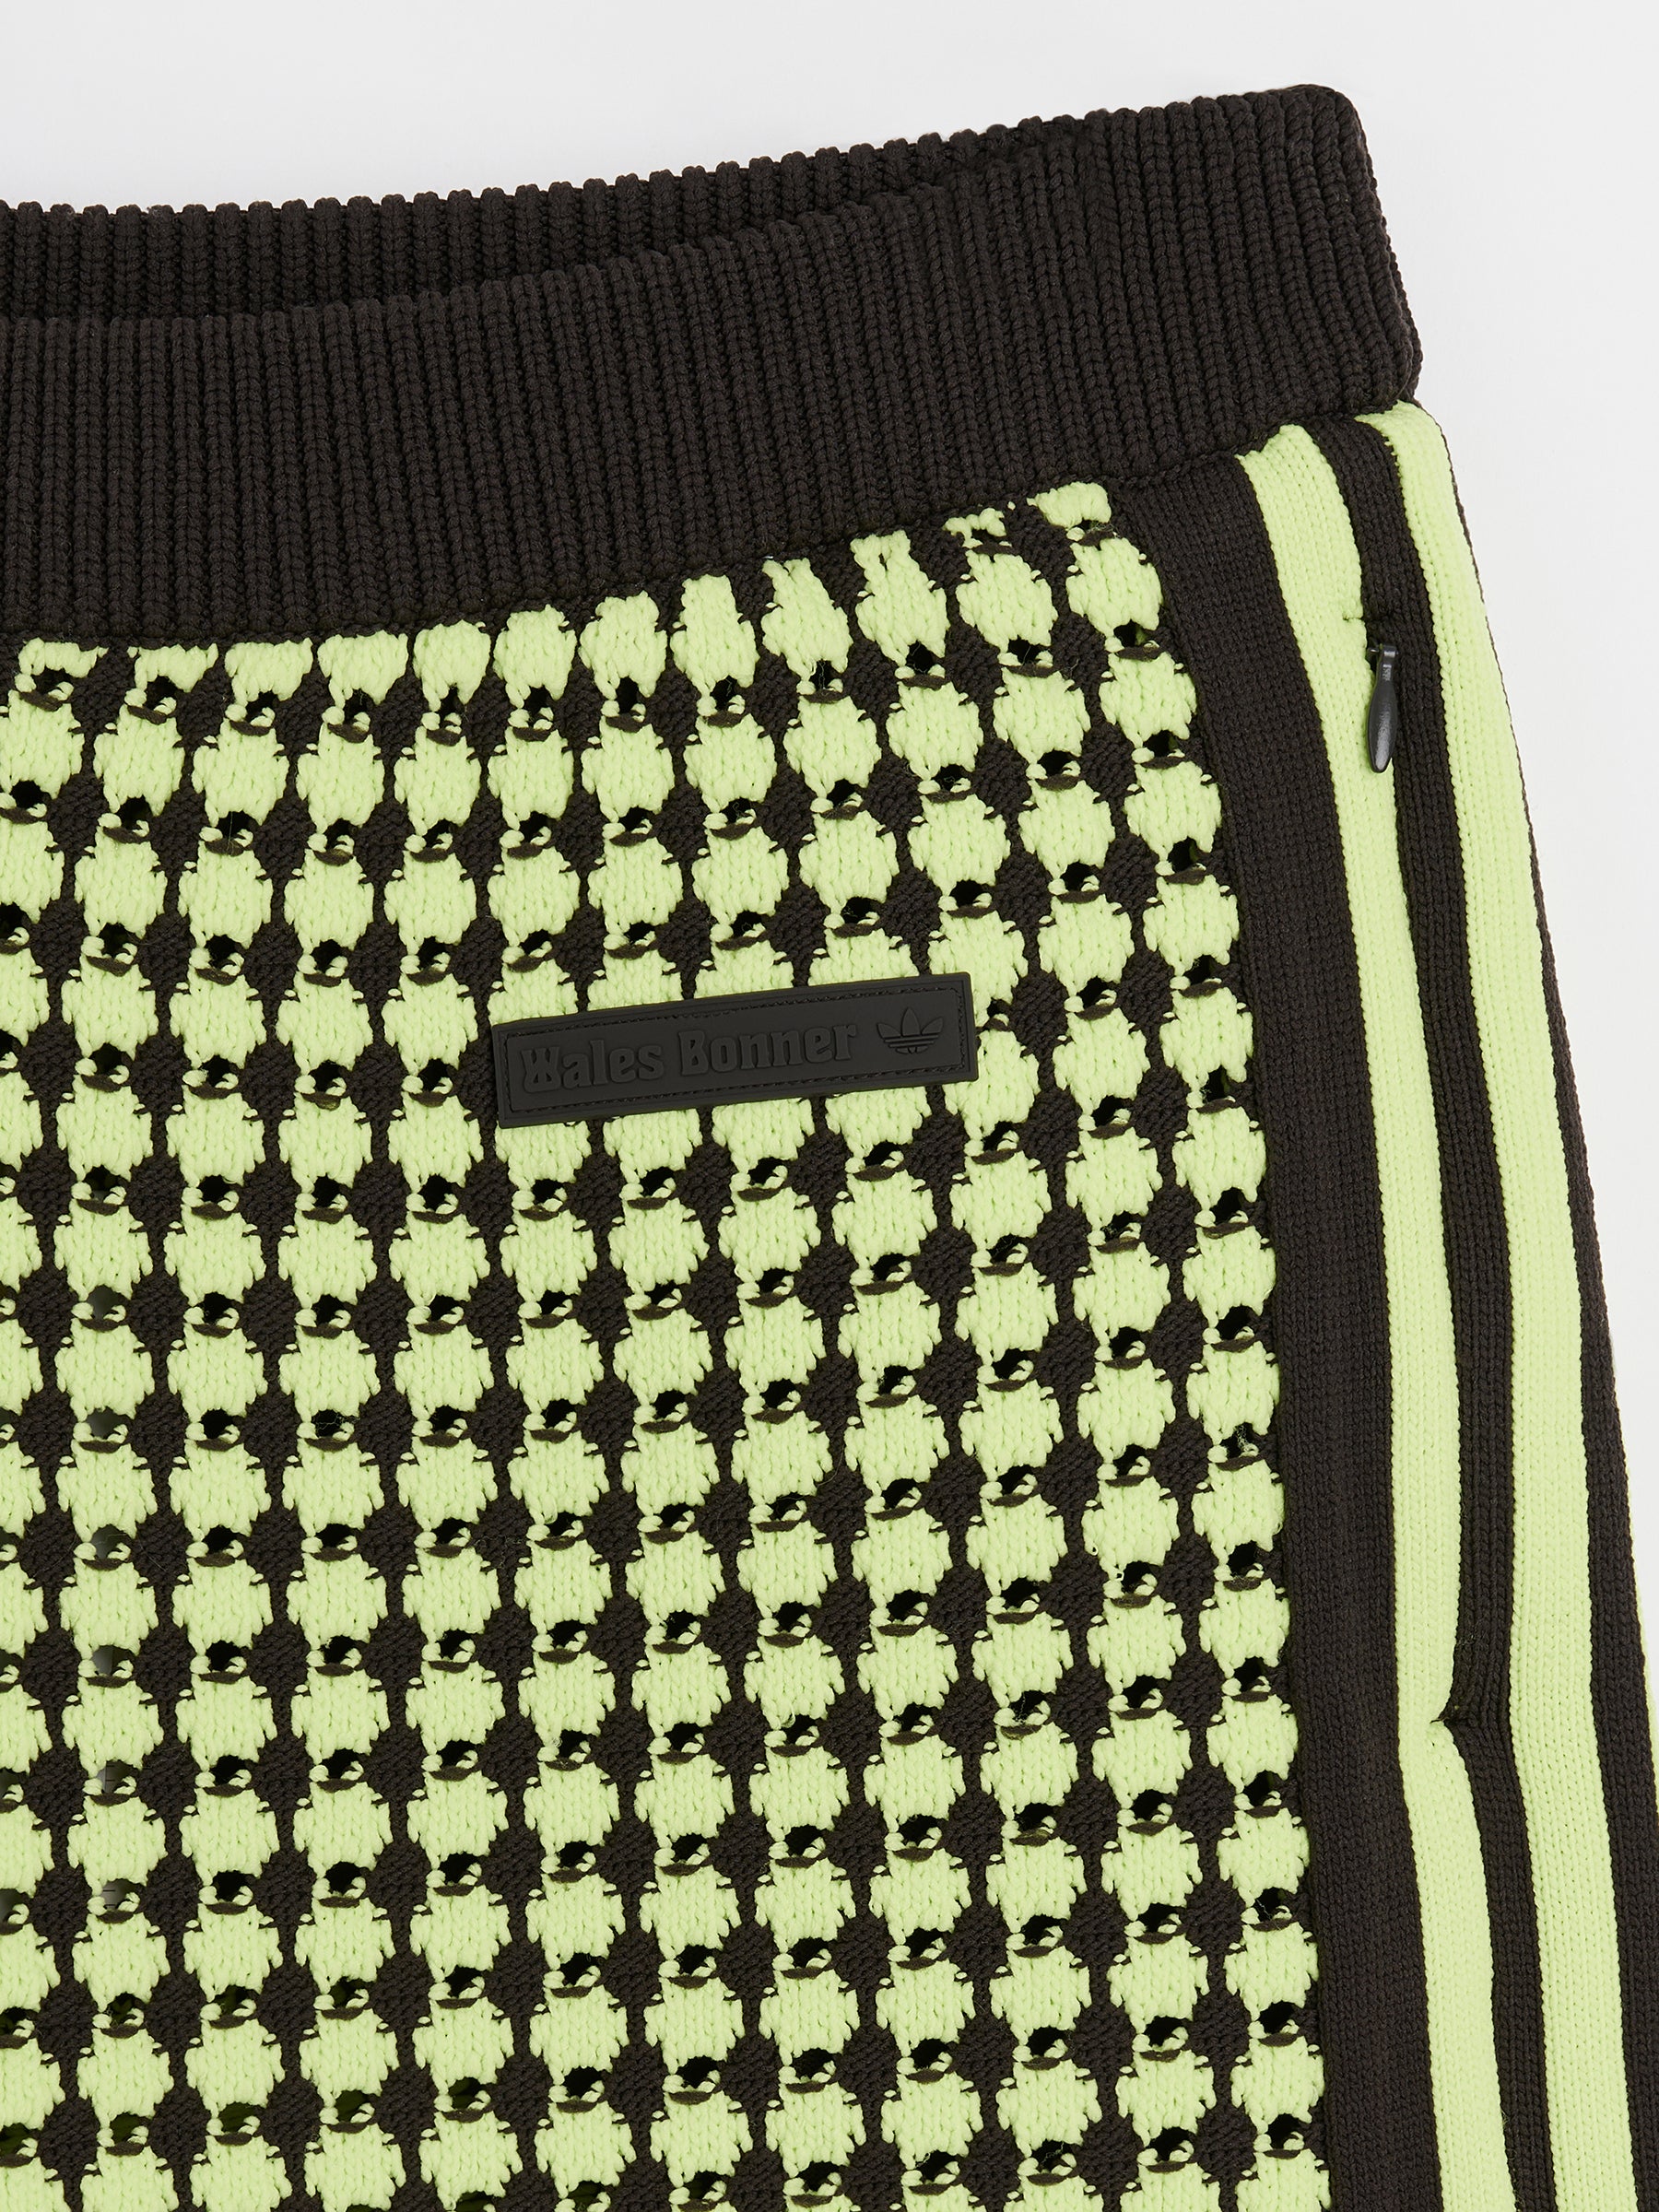 adidas Originals by Wales Bonner Crochet Shorts Sefrye / Nbrown